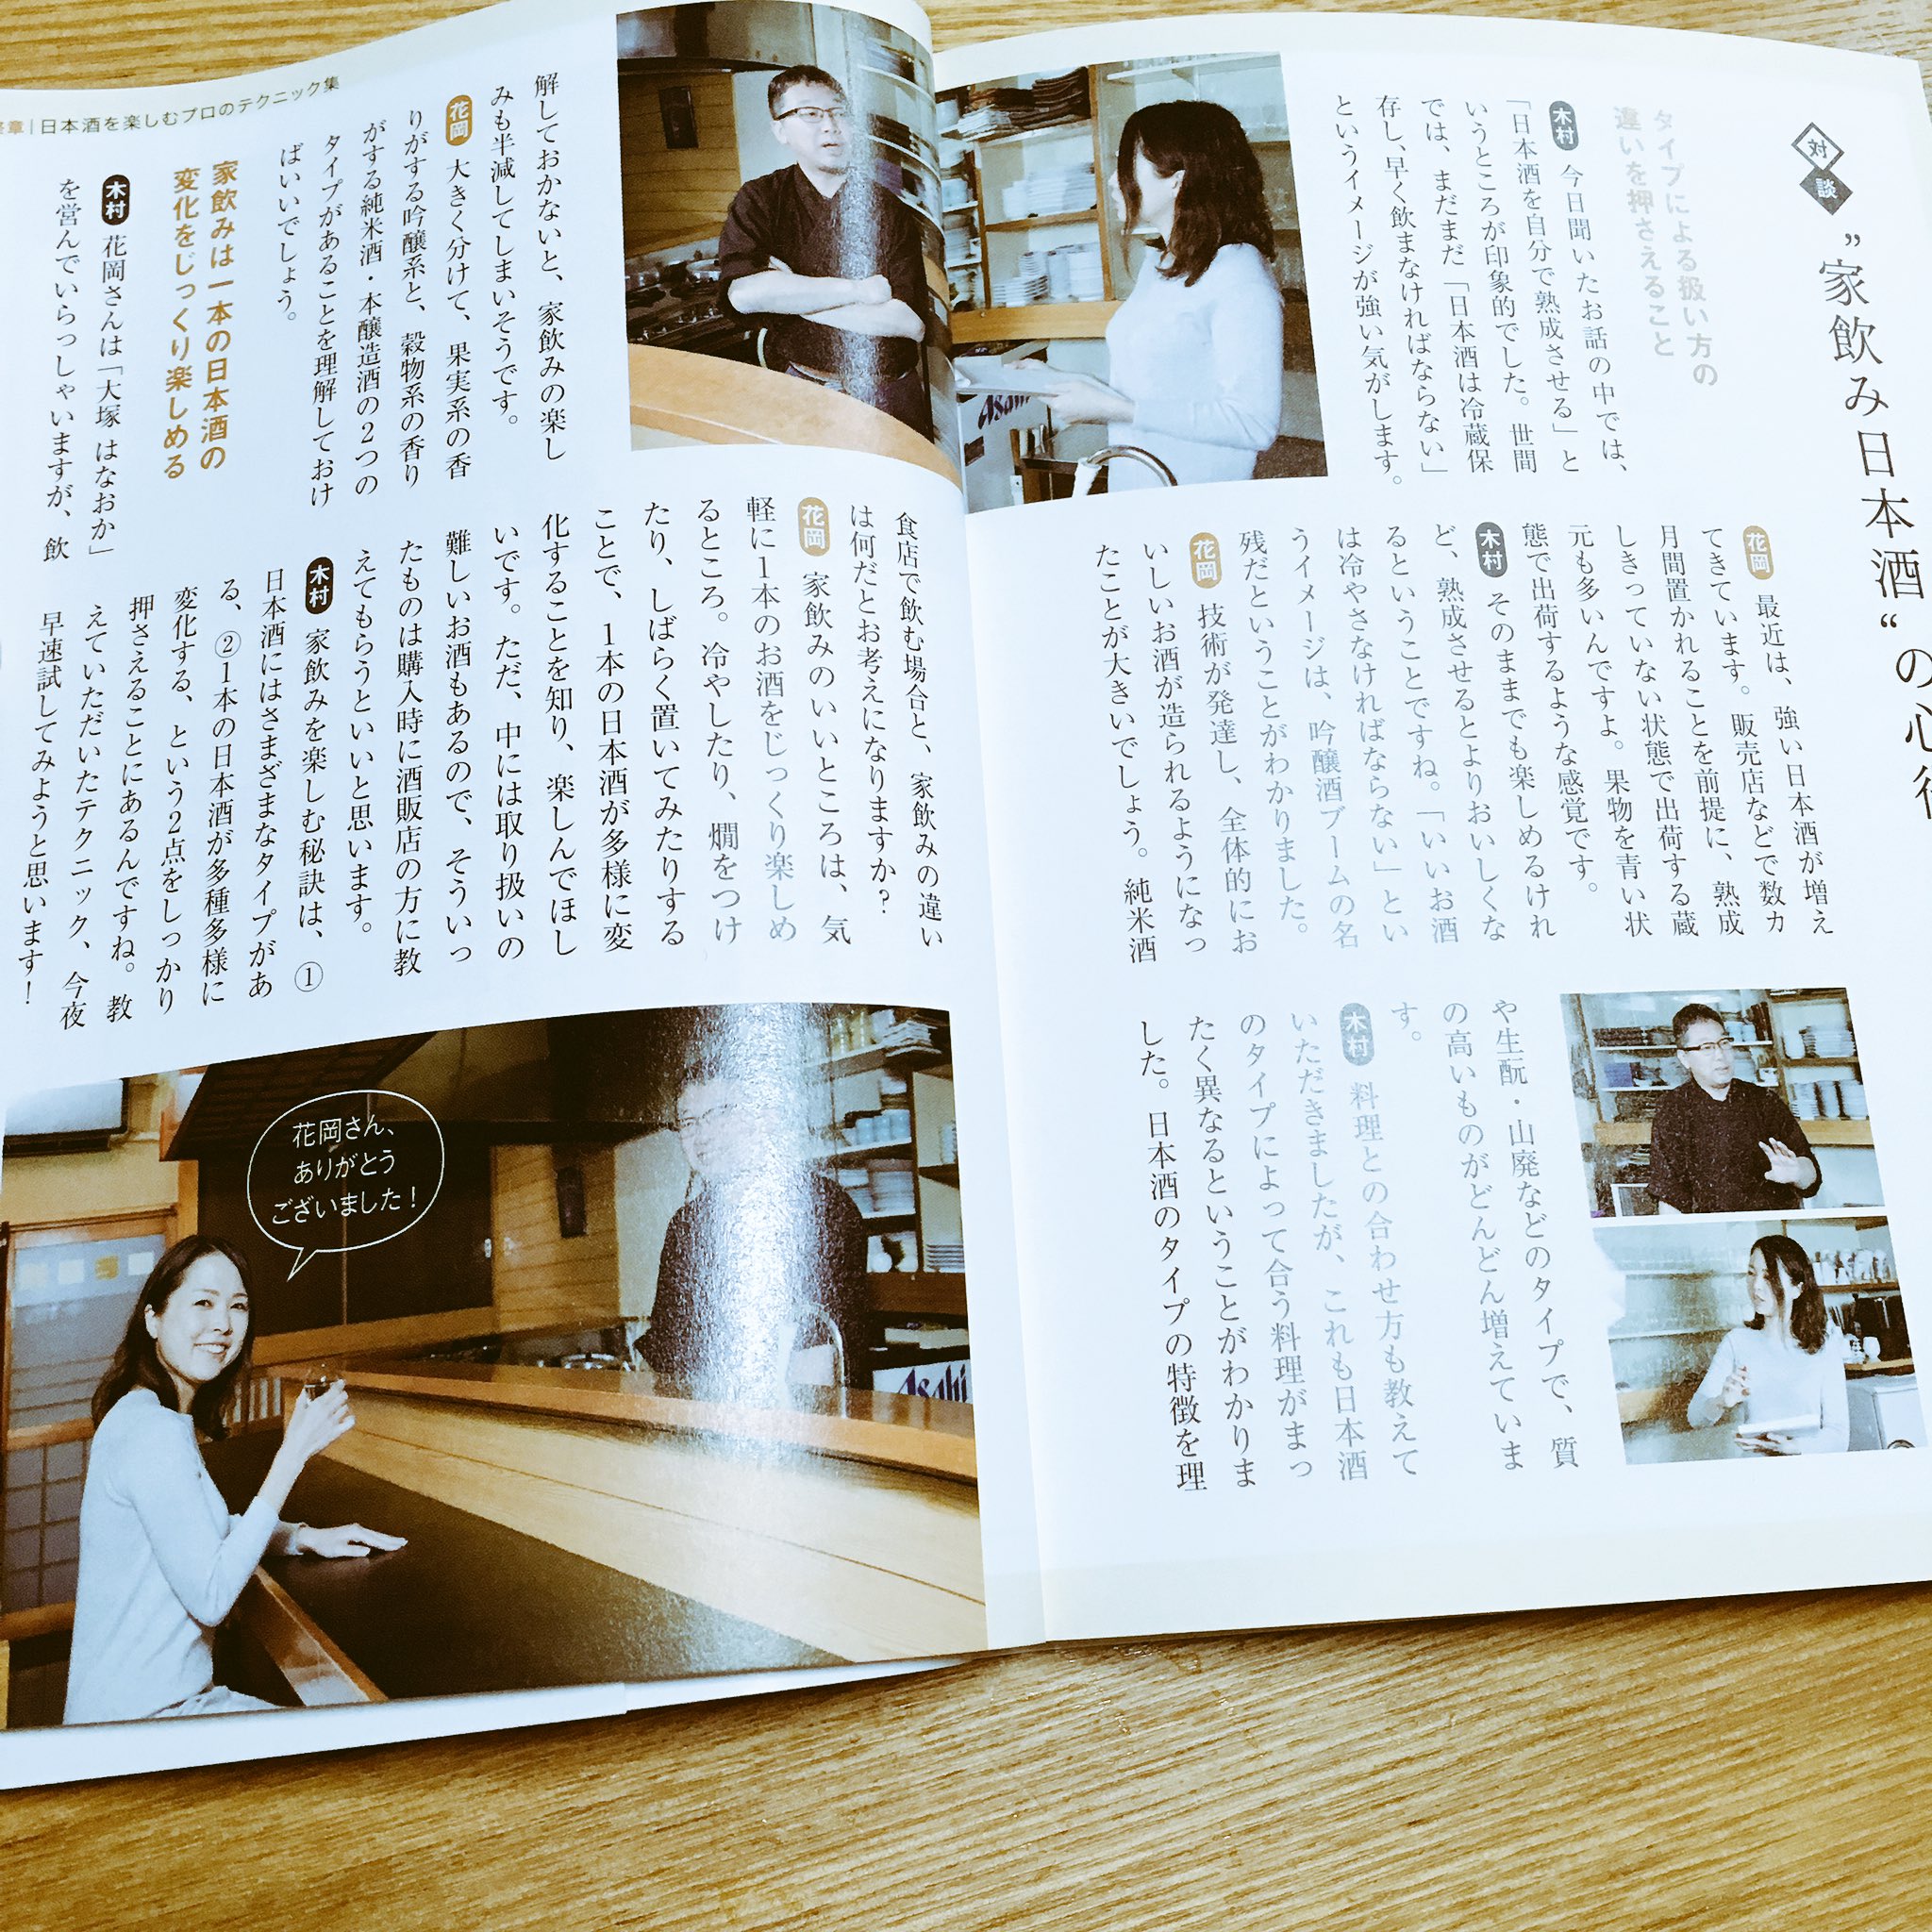 Saki Kimura Sake Journalist 昨日発売の技術評論社 うまい日本酒を知る 選ぶ もっと楽しむ 大人の自由時間mini にて 聴 酒師 木村咲貴が学ぶ 日本酒を楽しむプロのテクニック集 という章に一章まるっと登場しております T Co